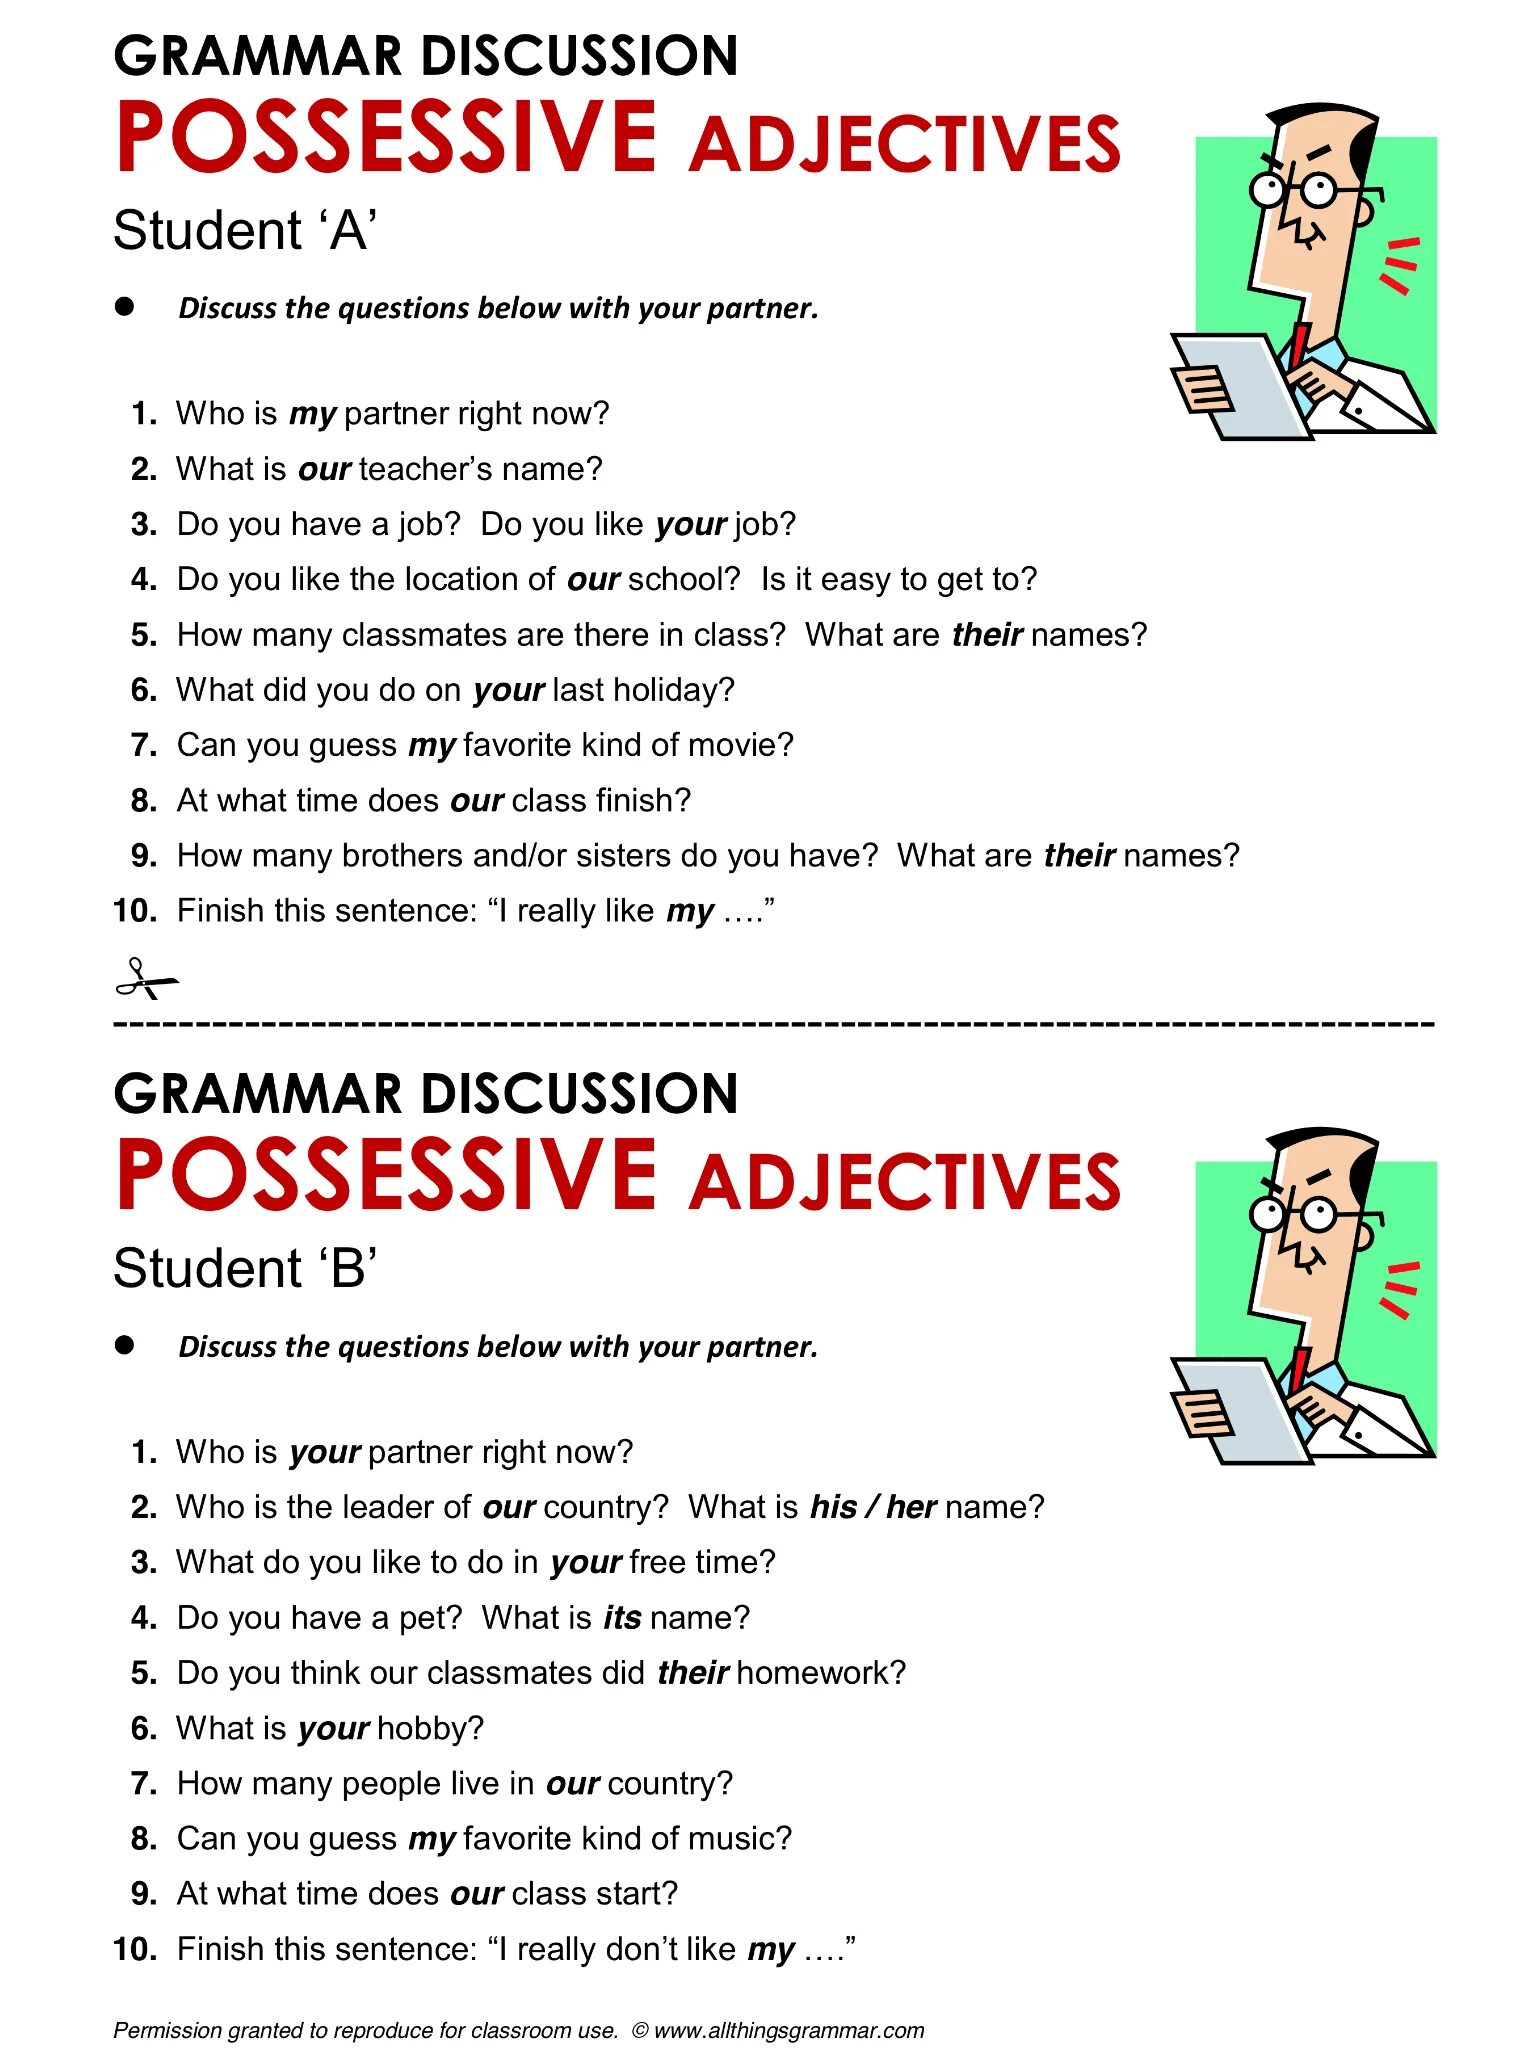 Possessive pronouns speaking activities. Possessive adjectives. Possessive adjectives карточки. Grammar possessive adjectives. Possessive adjectives worksheet